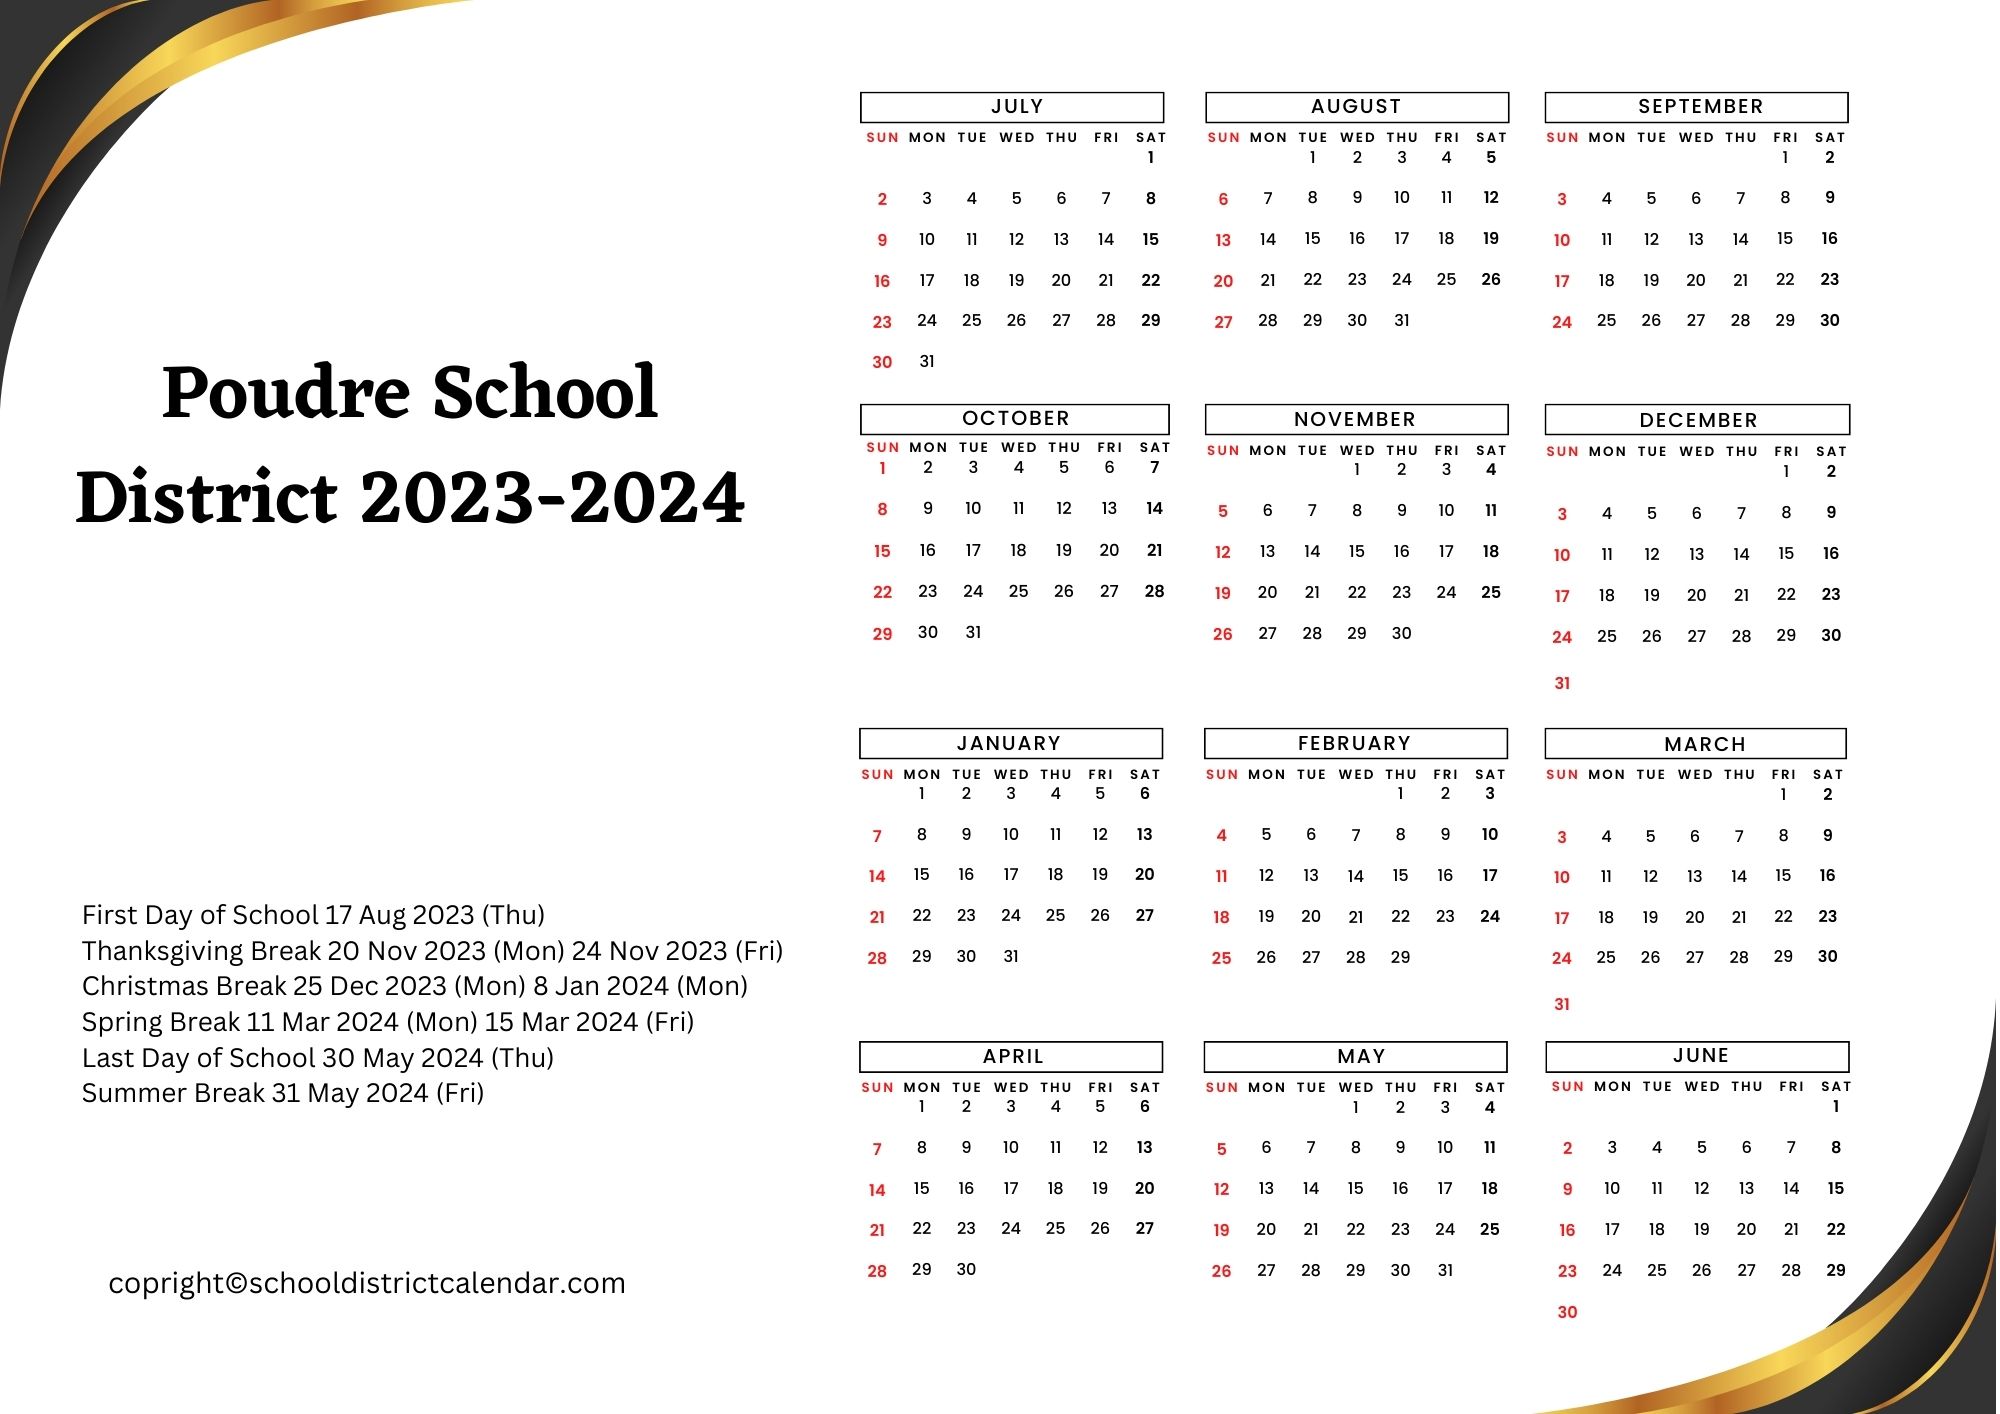 poudre-school-district-calendar-holidays-2023-2024